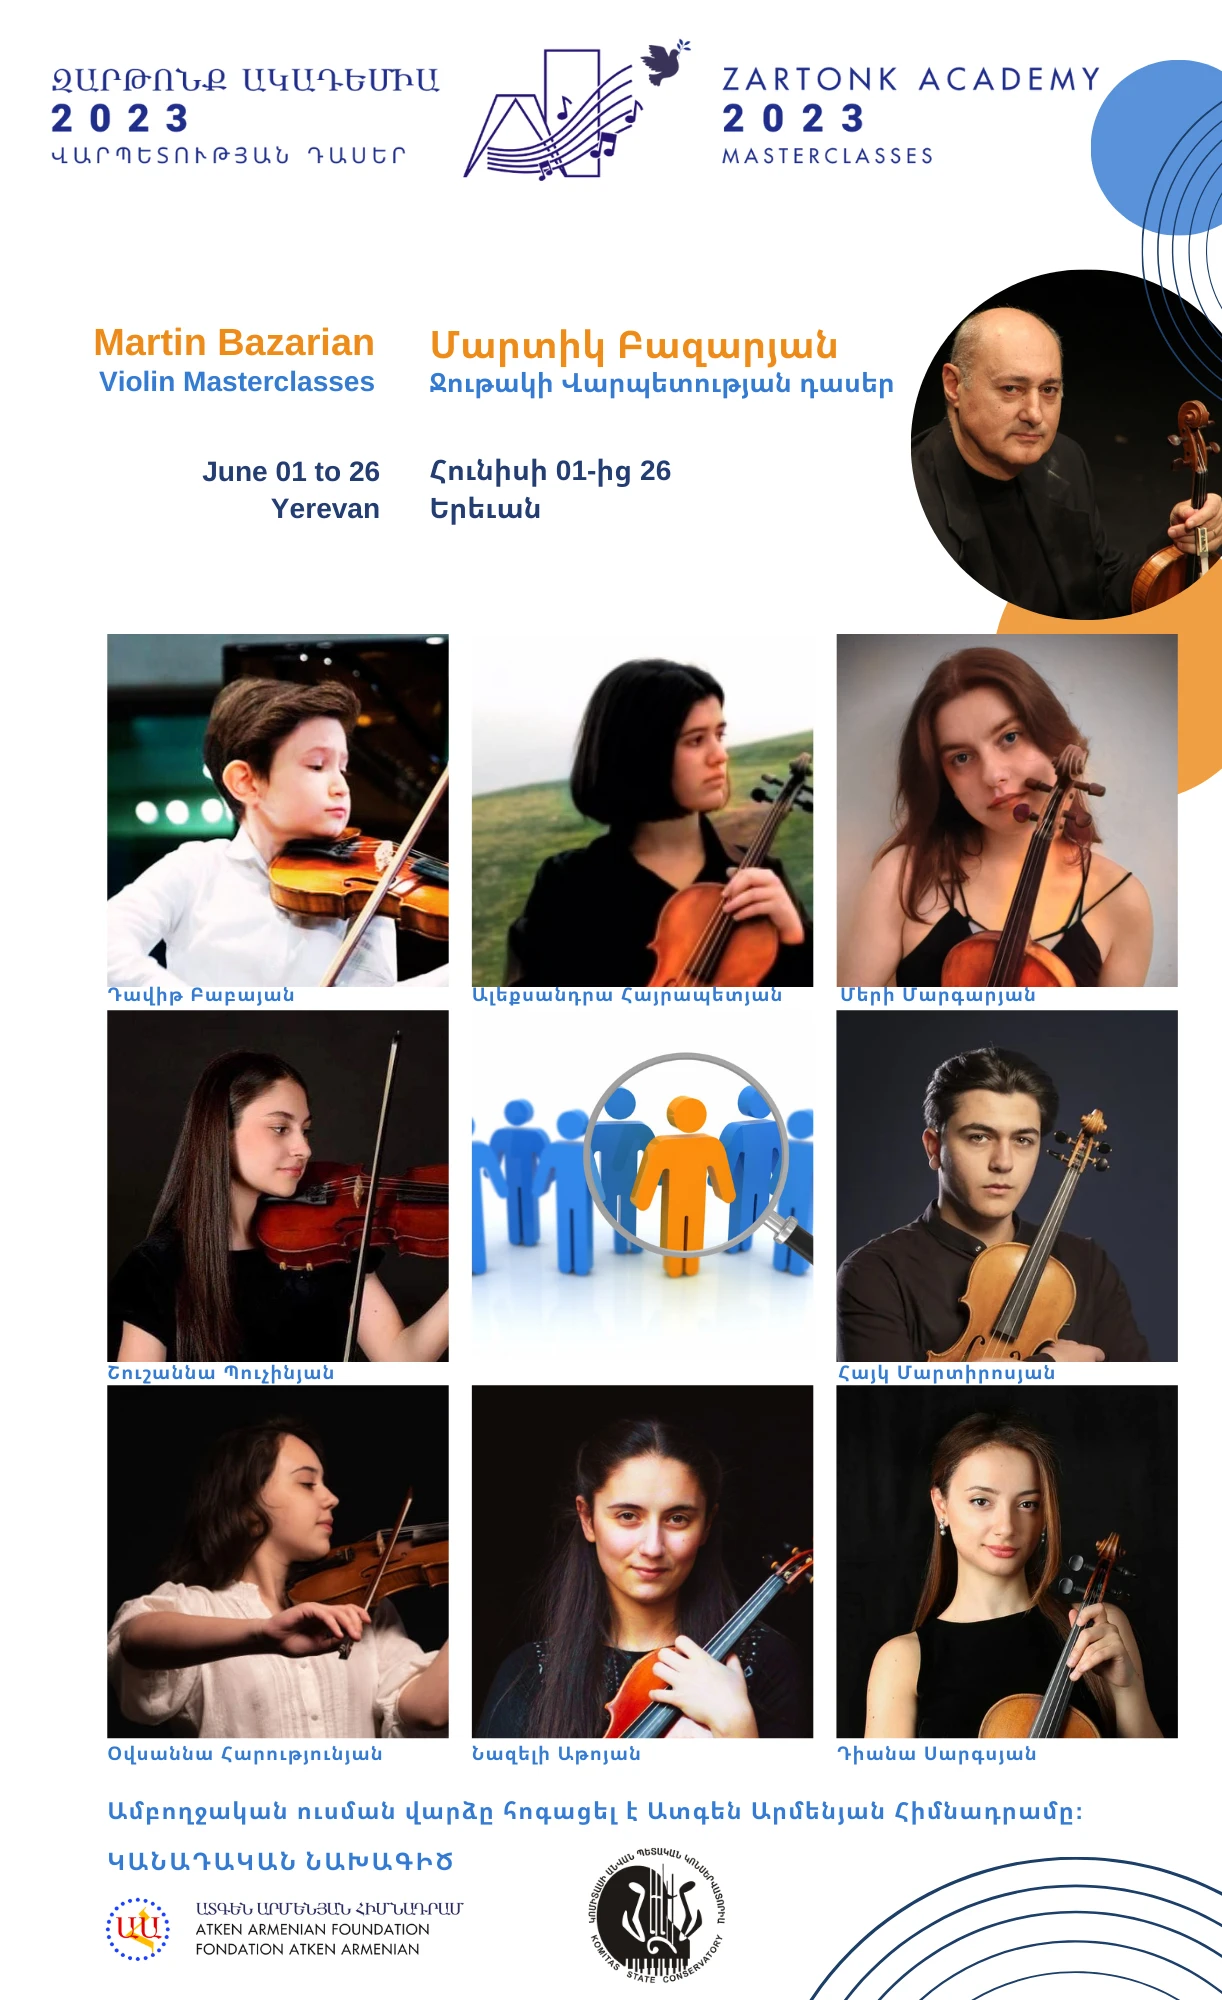 Zartonk Academy Masterclasses in June with violinist Martin Bazarian